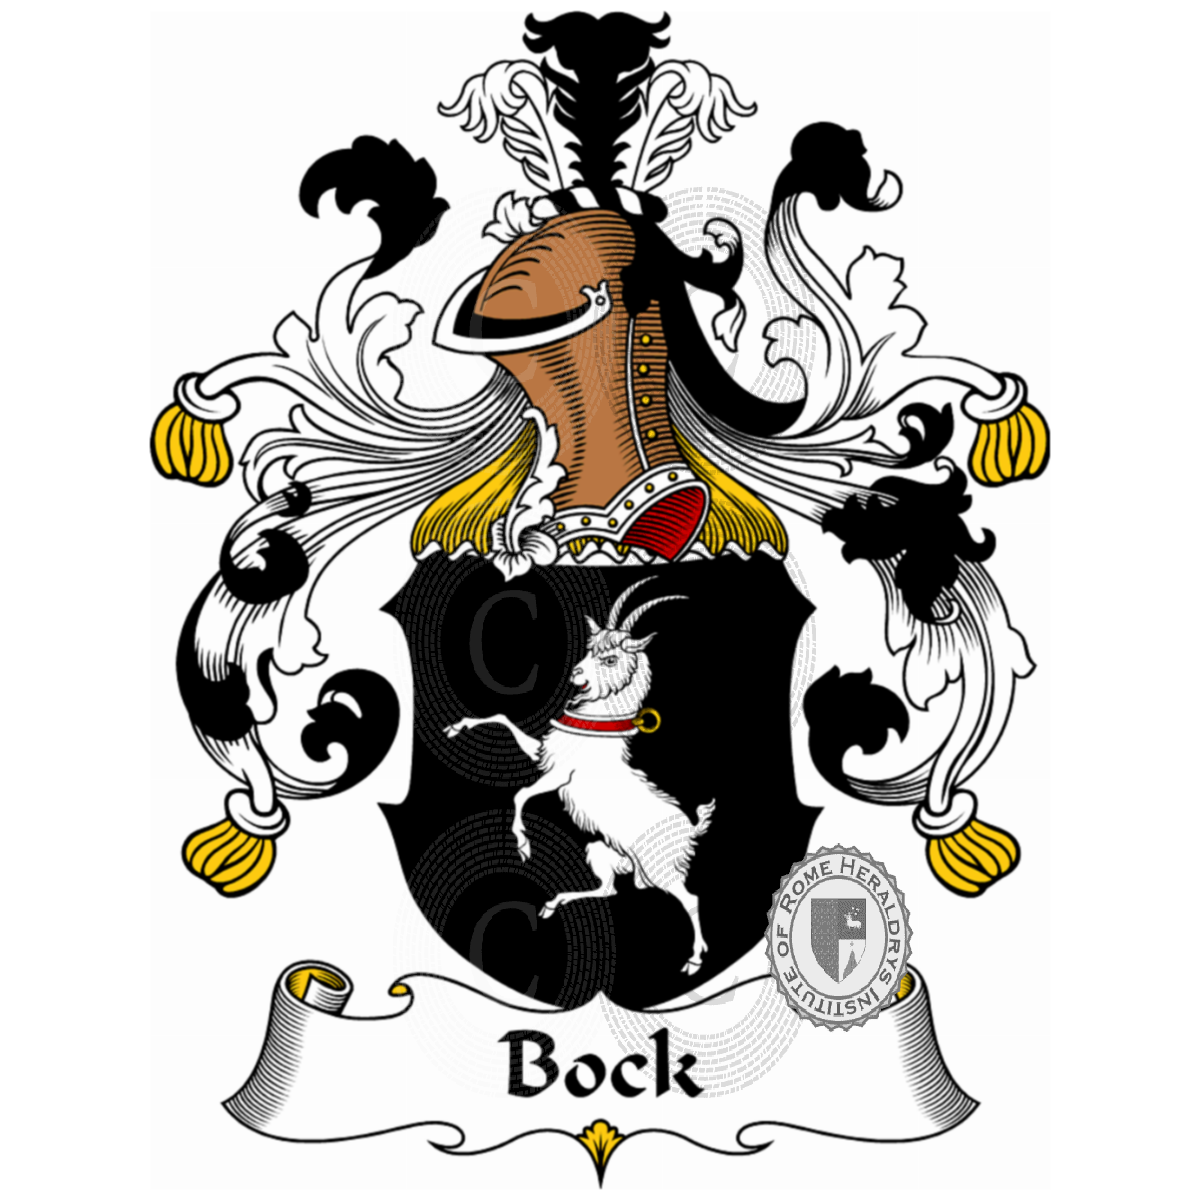 Wappen der FamilieBock